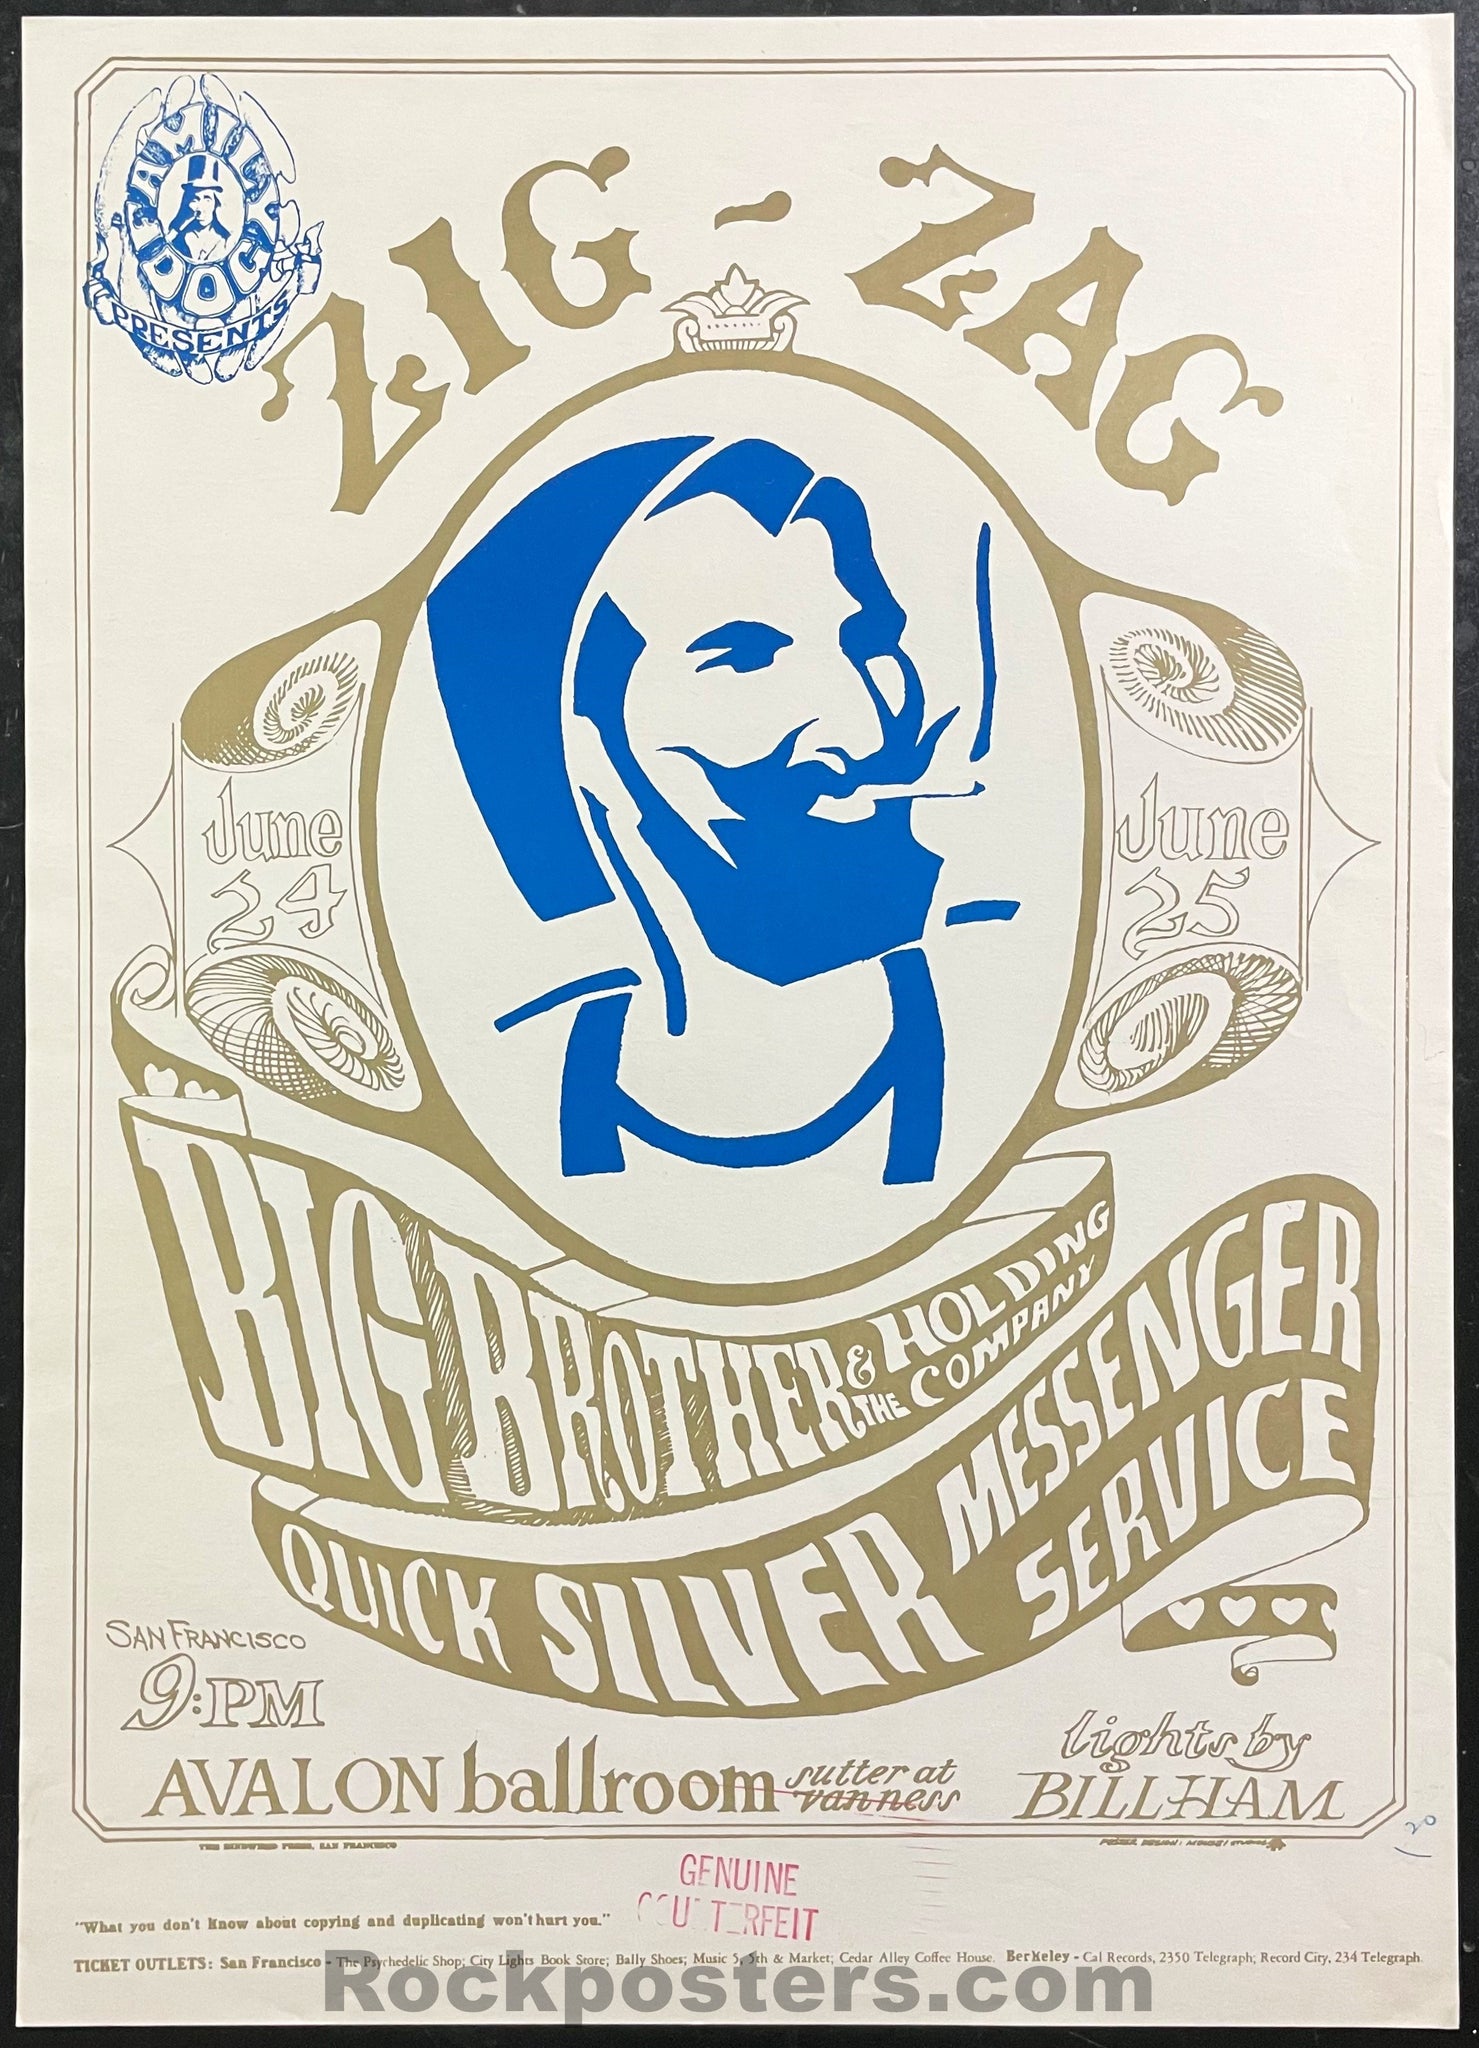 AUCTION - FD 14 - Big Brother Janis Joplin - Zig-Zag Man - "Genuine Counterfeit" - 1966 Poster - Excellent